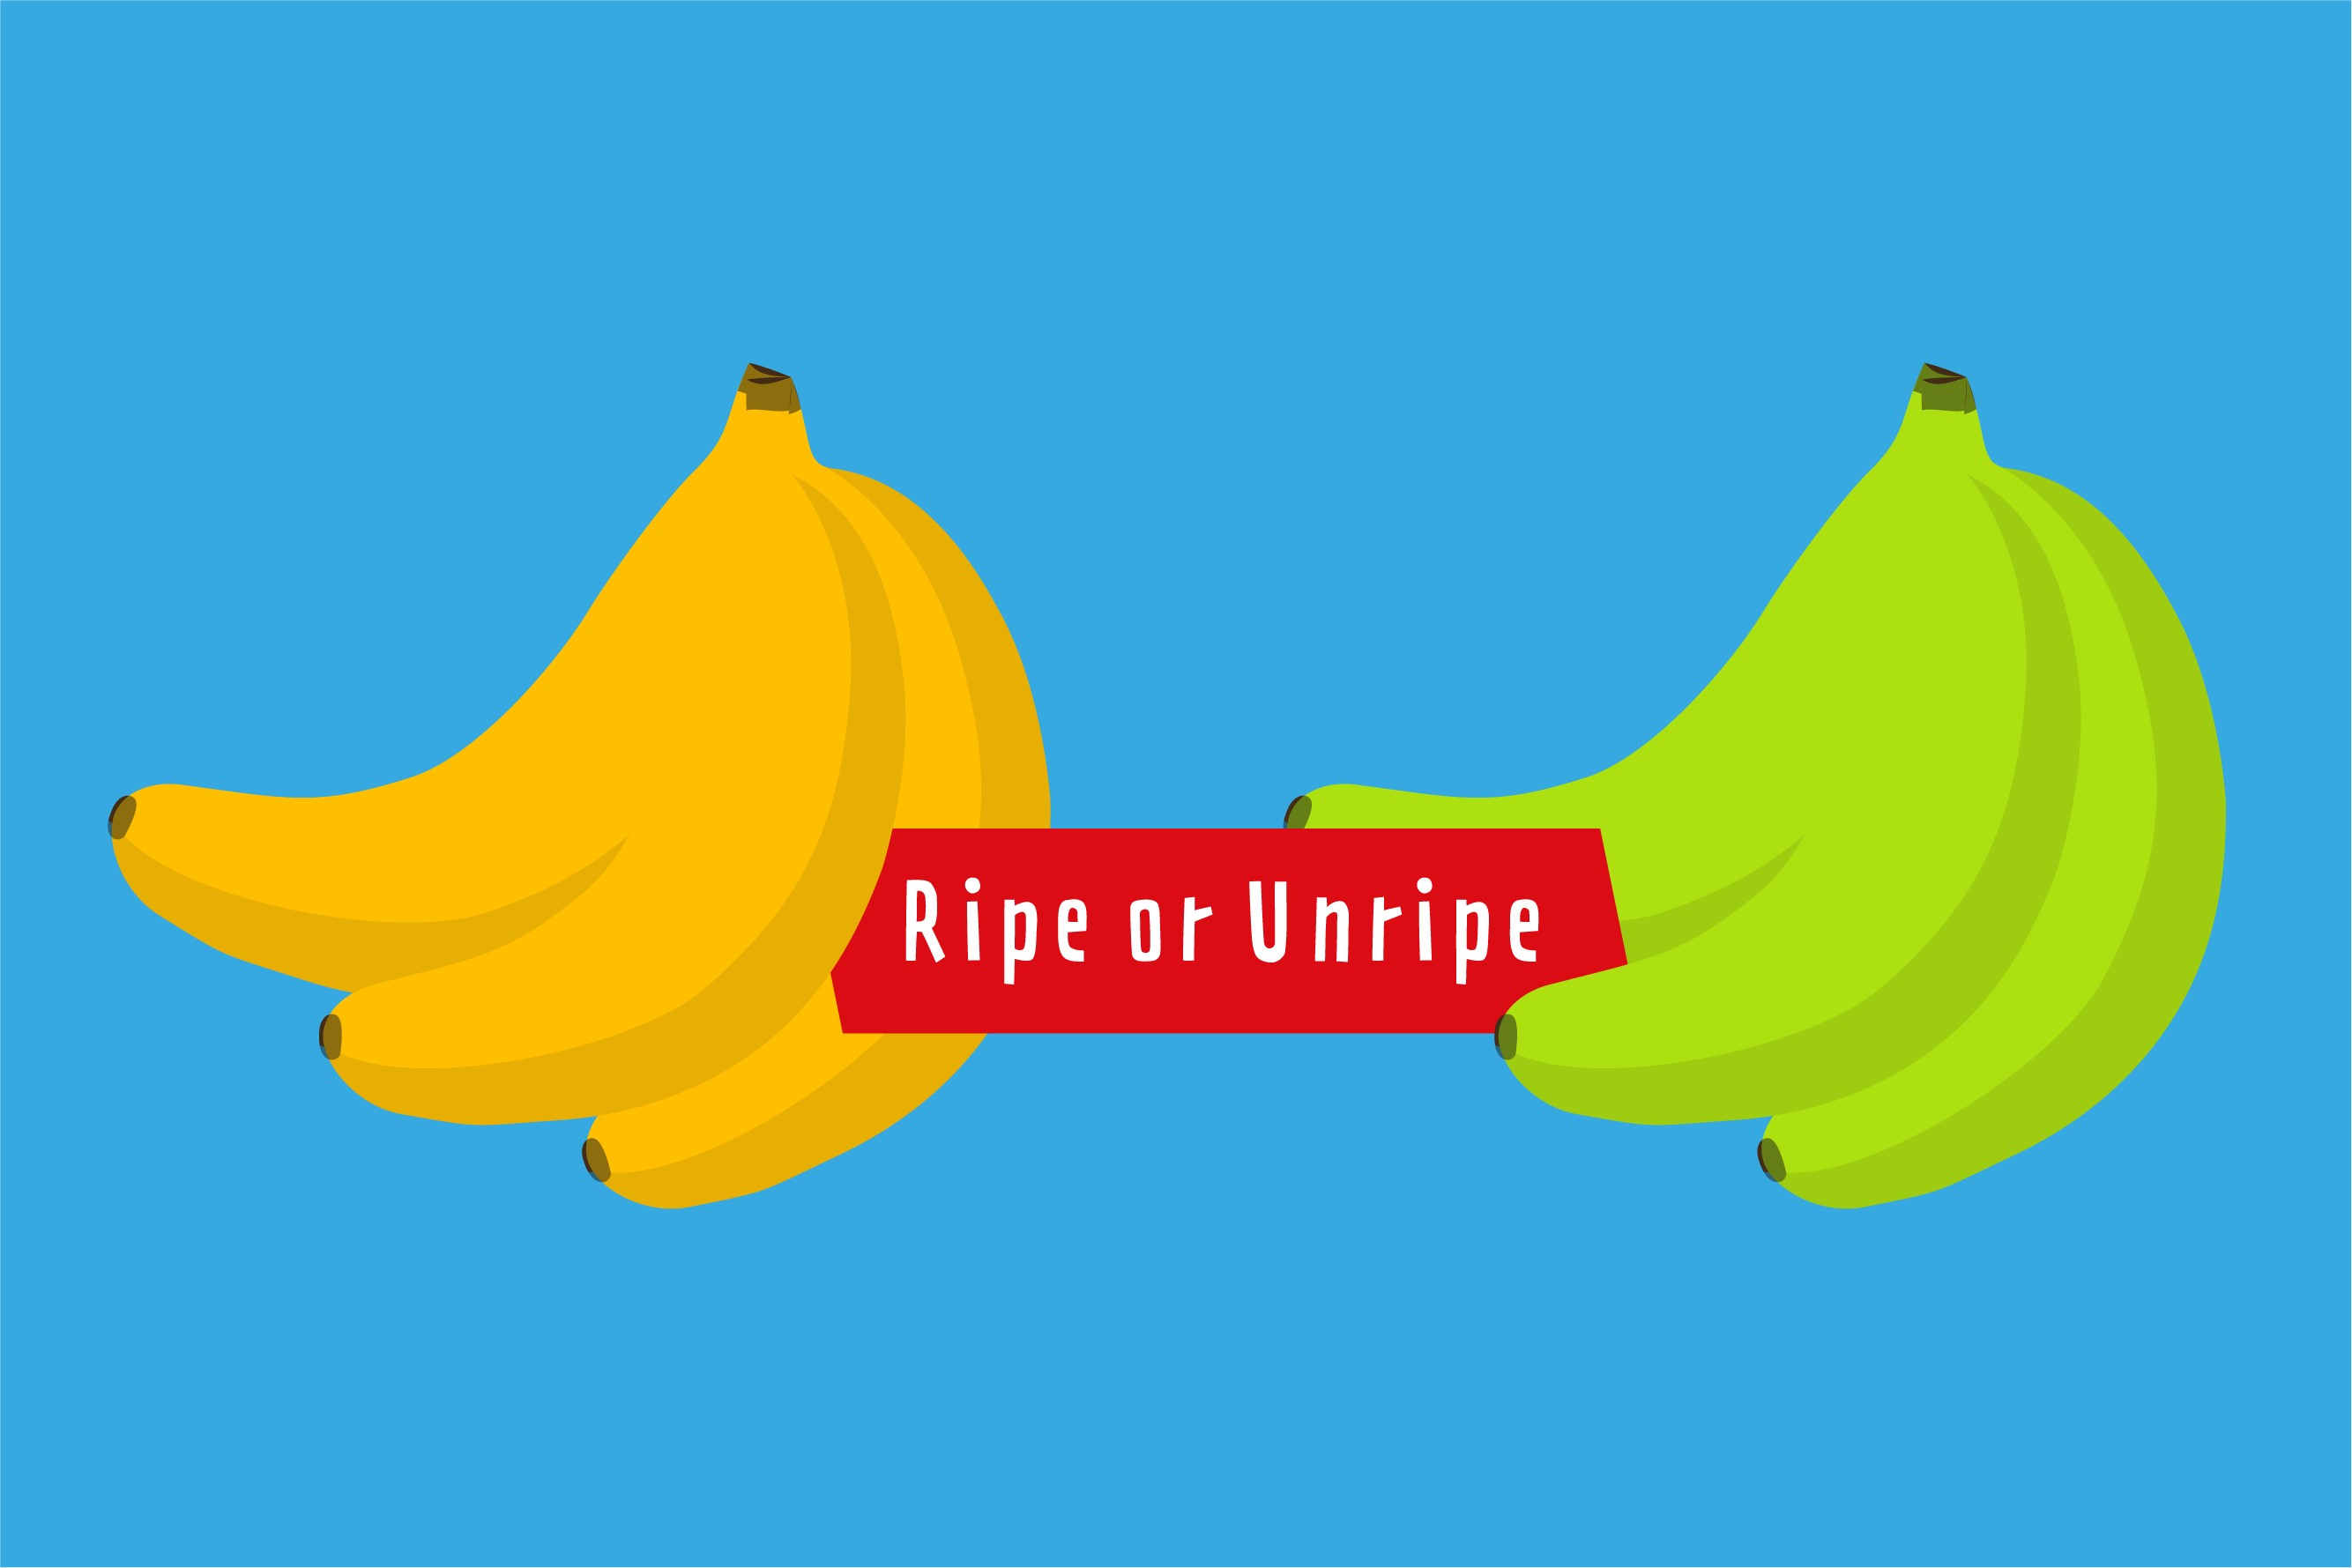 One bunch of yellow ripe banana's and one bunch of green unripe banana's.